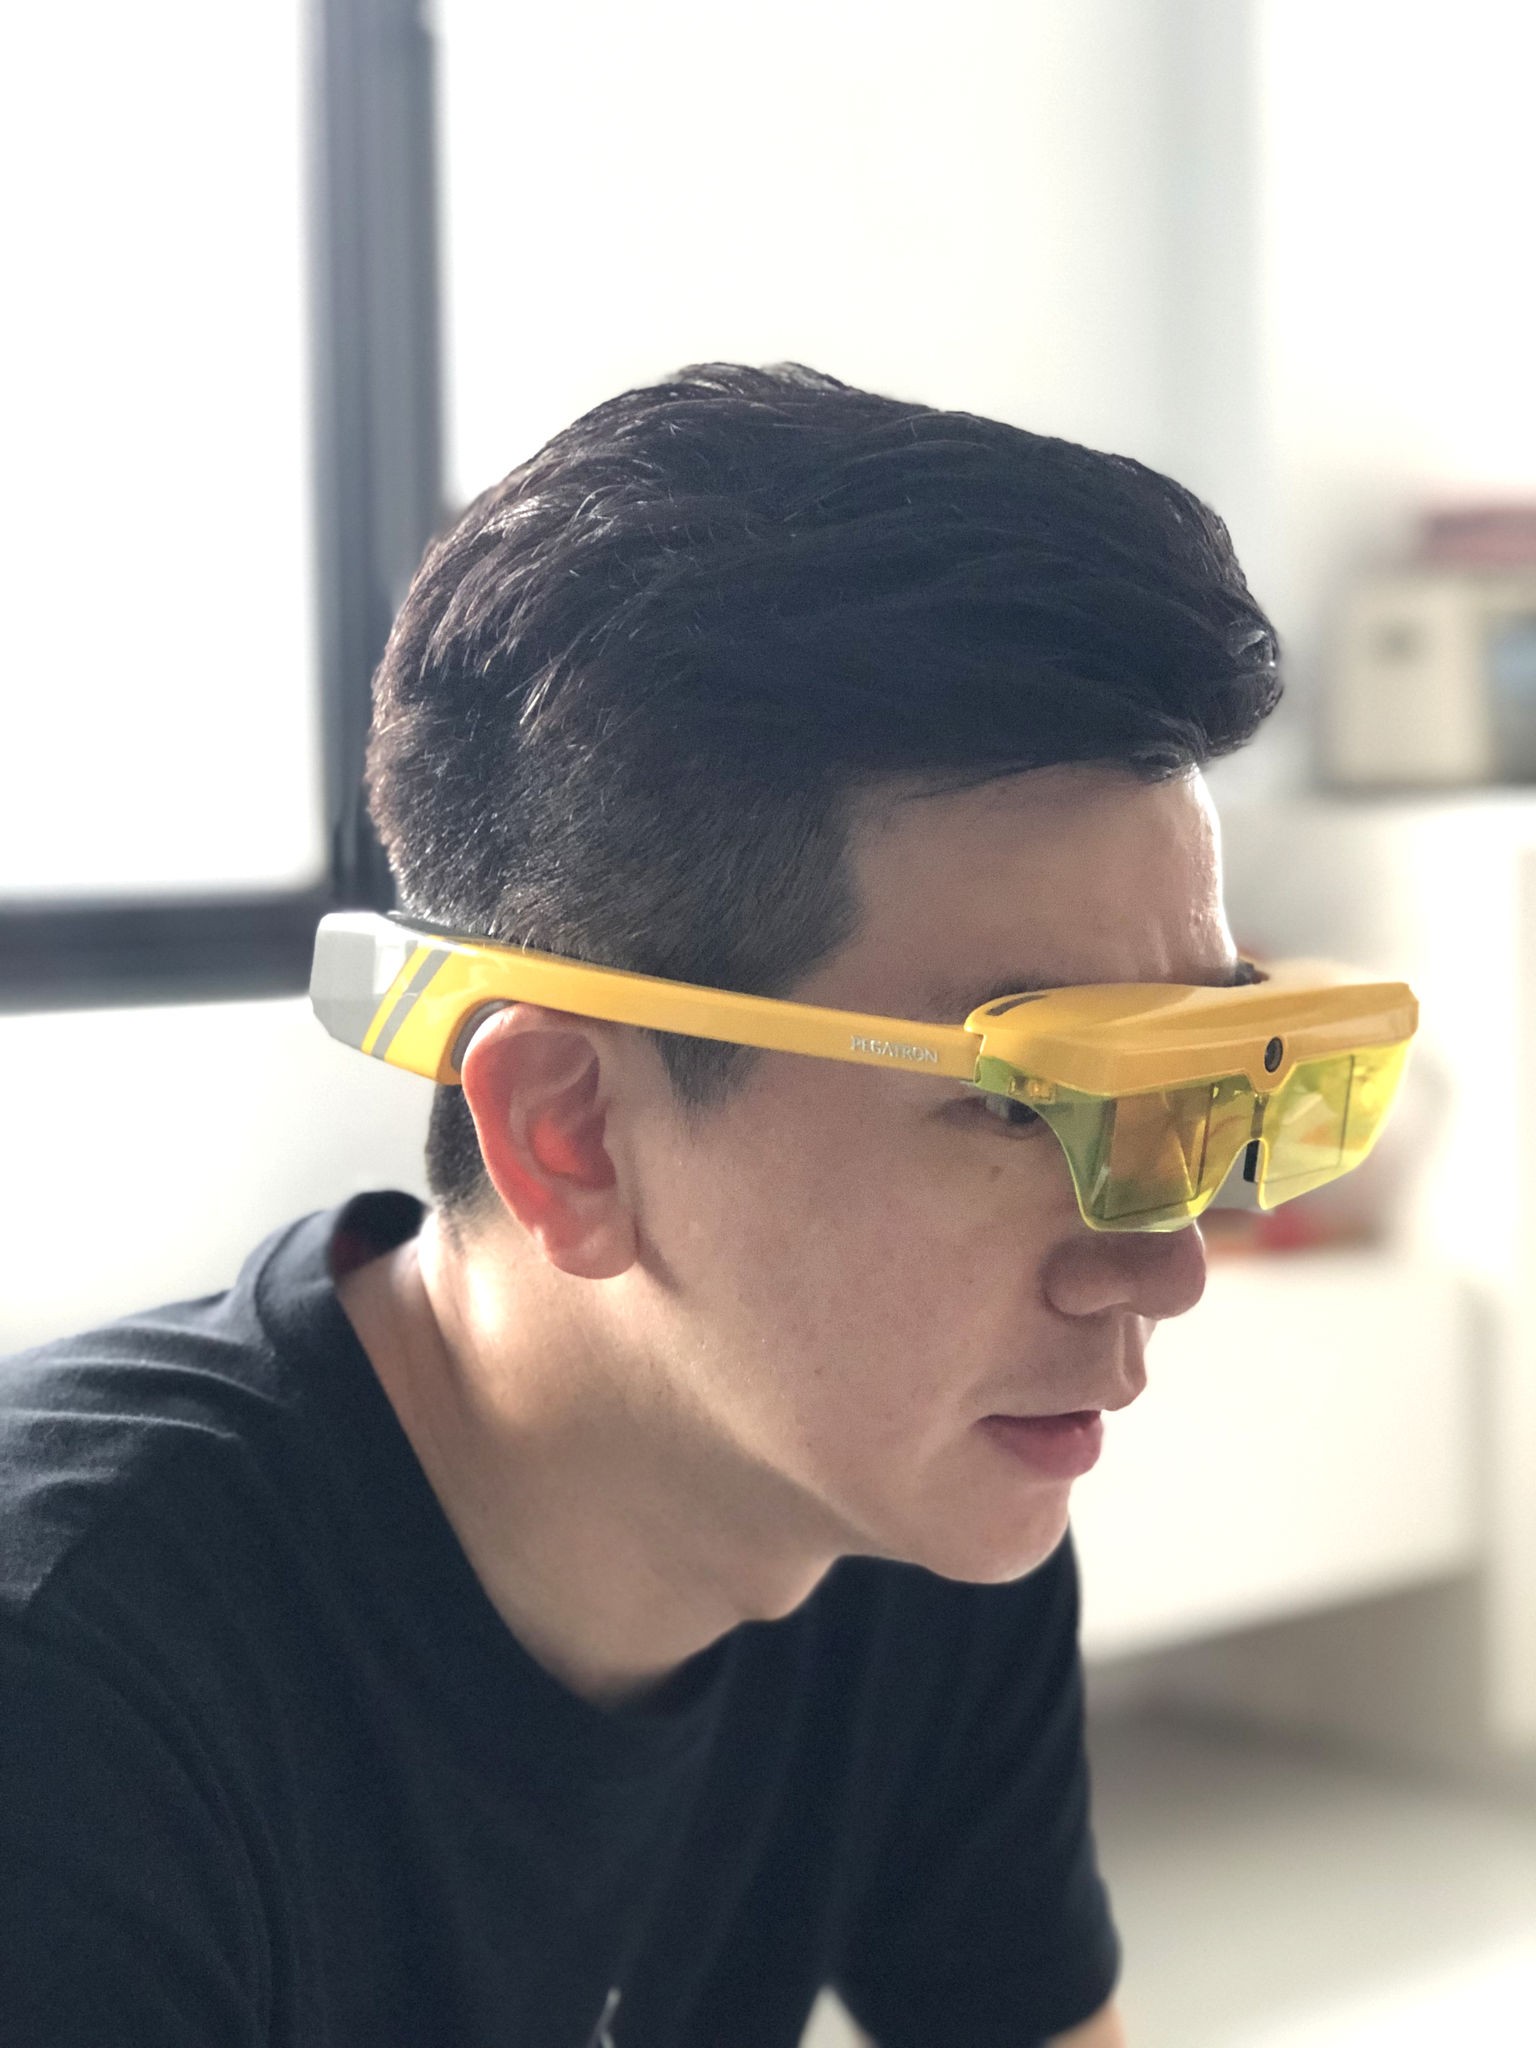 AiR擴增實境AR眼鏡